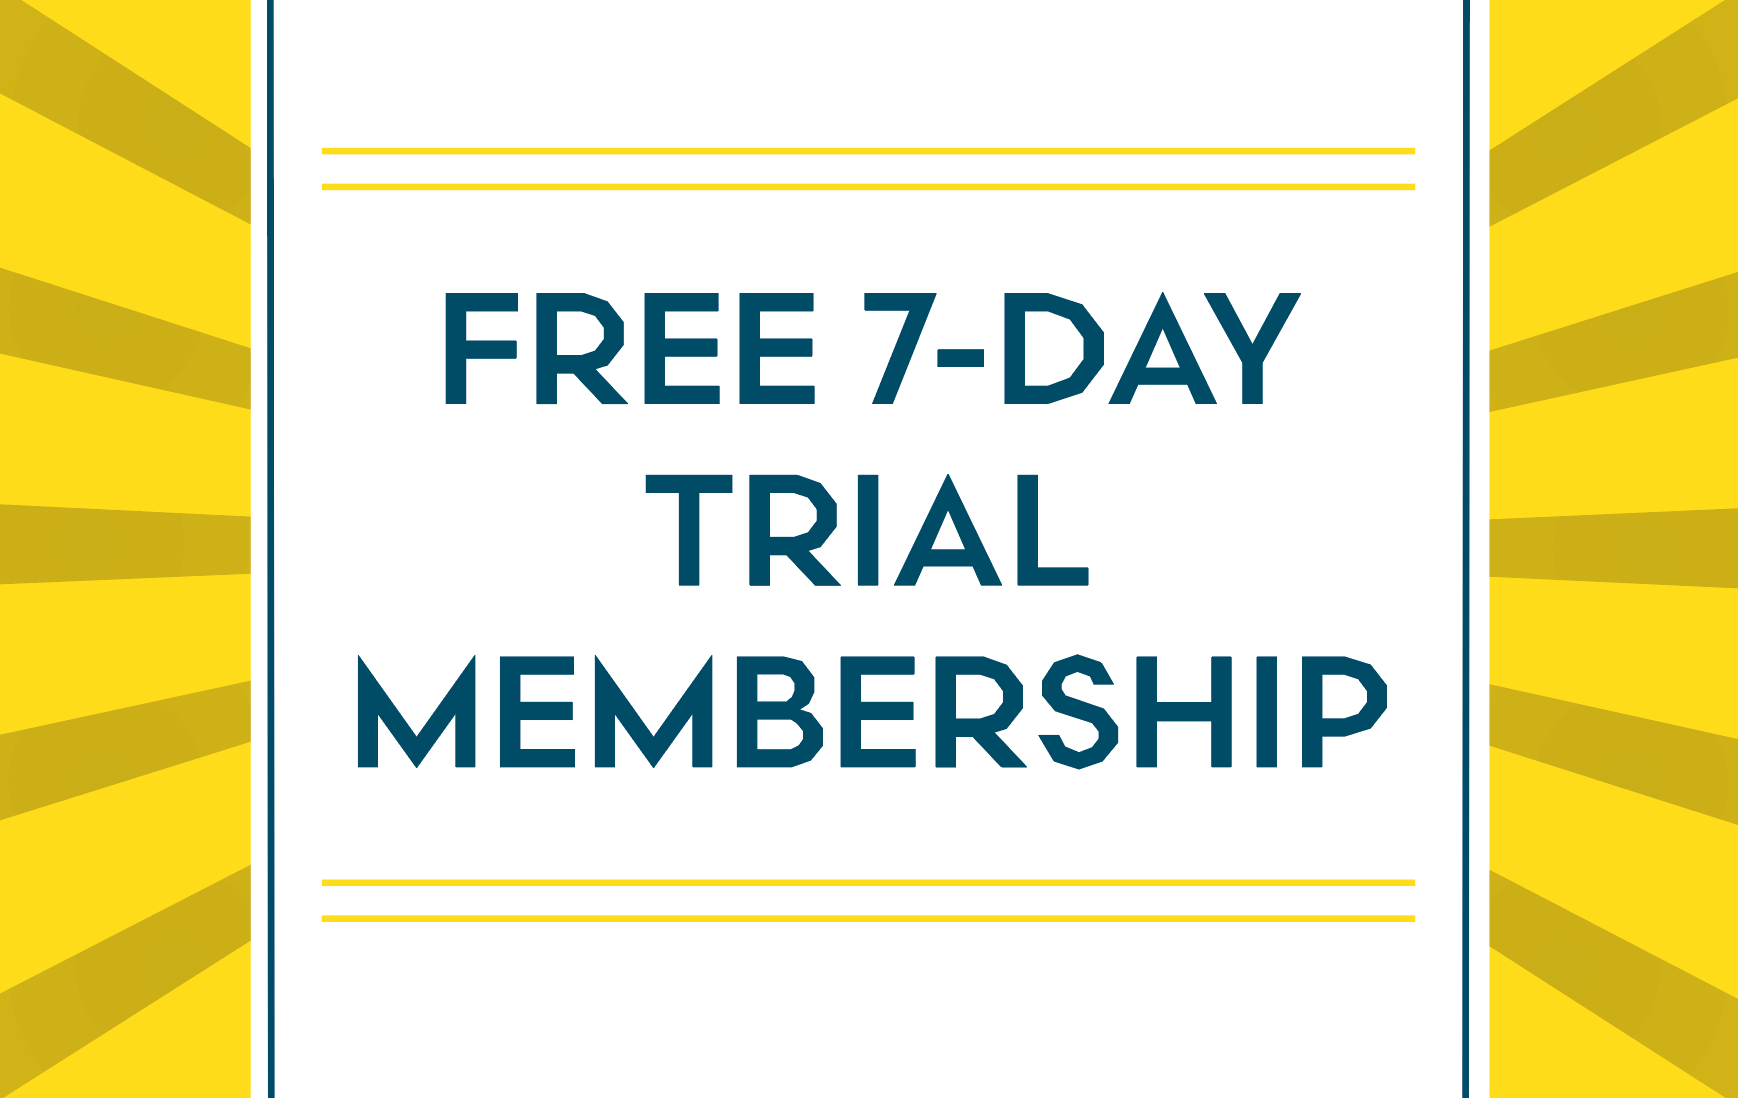 Free 7-Day Trial Membership